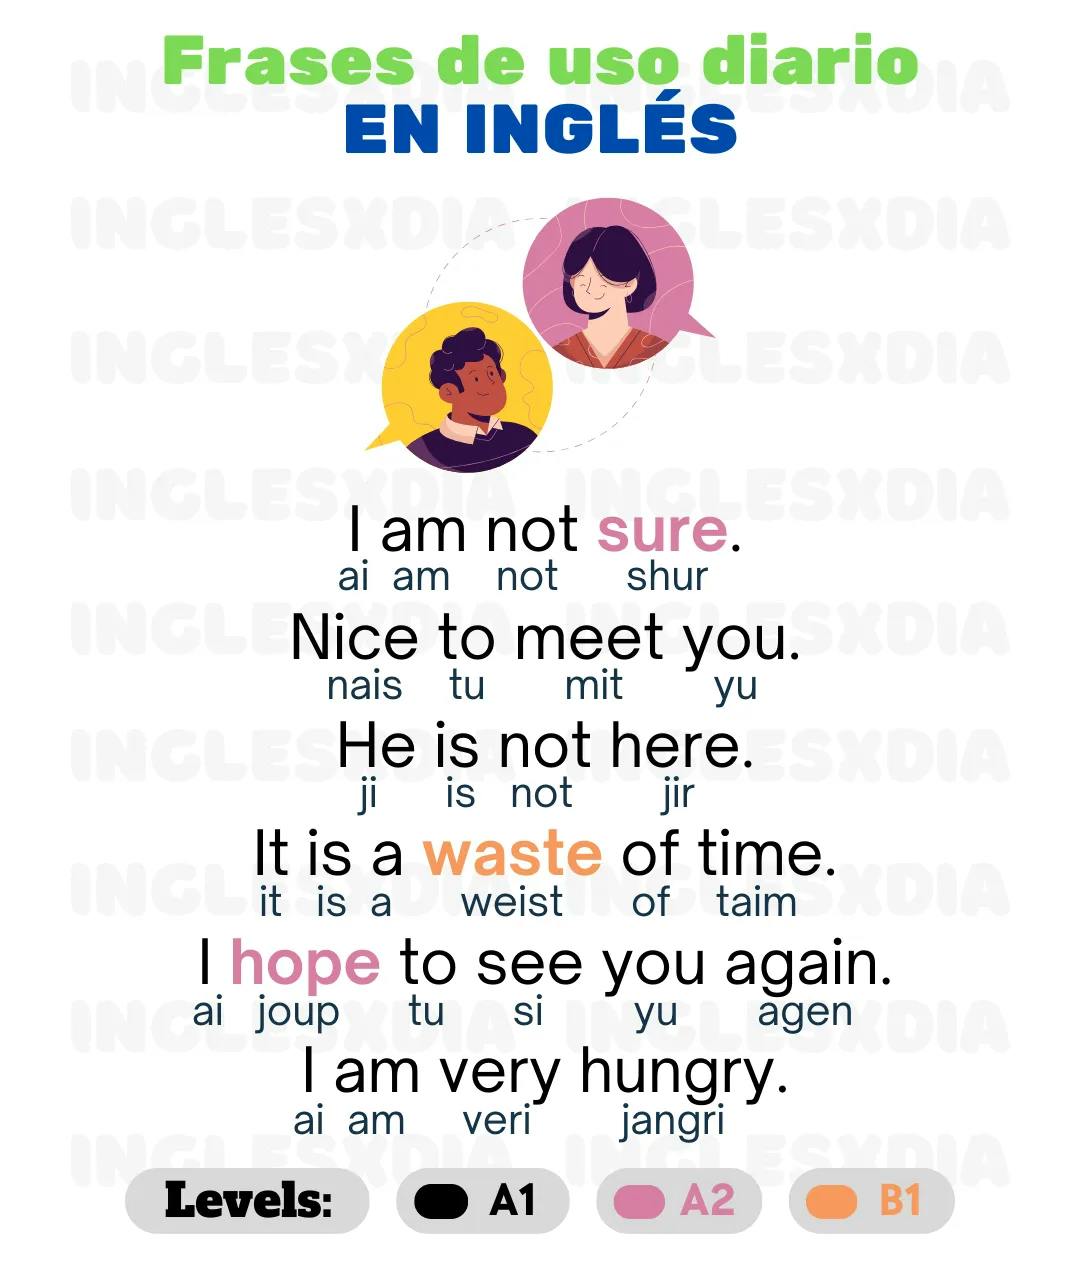 Curso de inglés en línea: frases en inglés de uso diario · I am not sure, nice to...